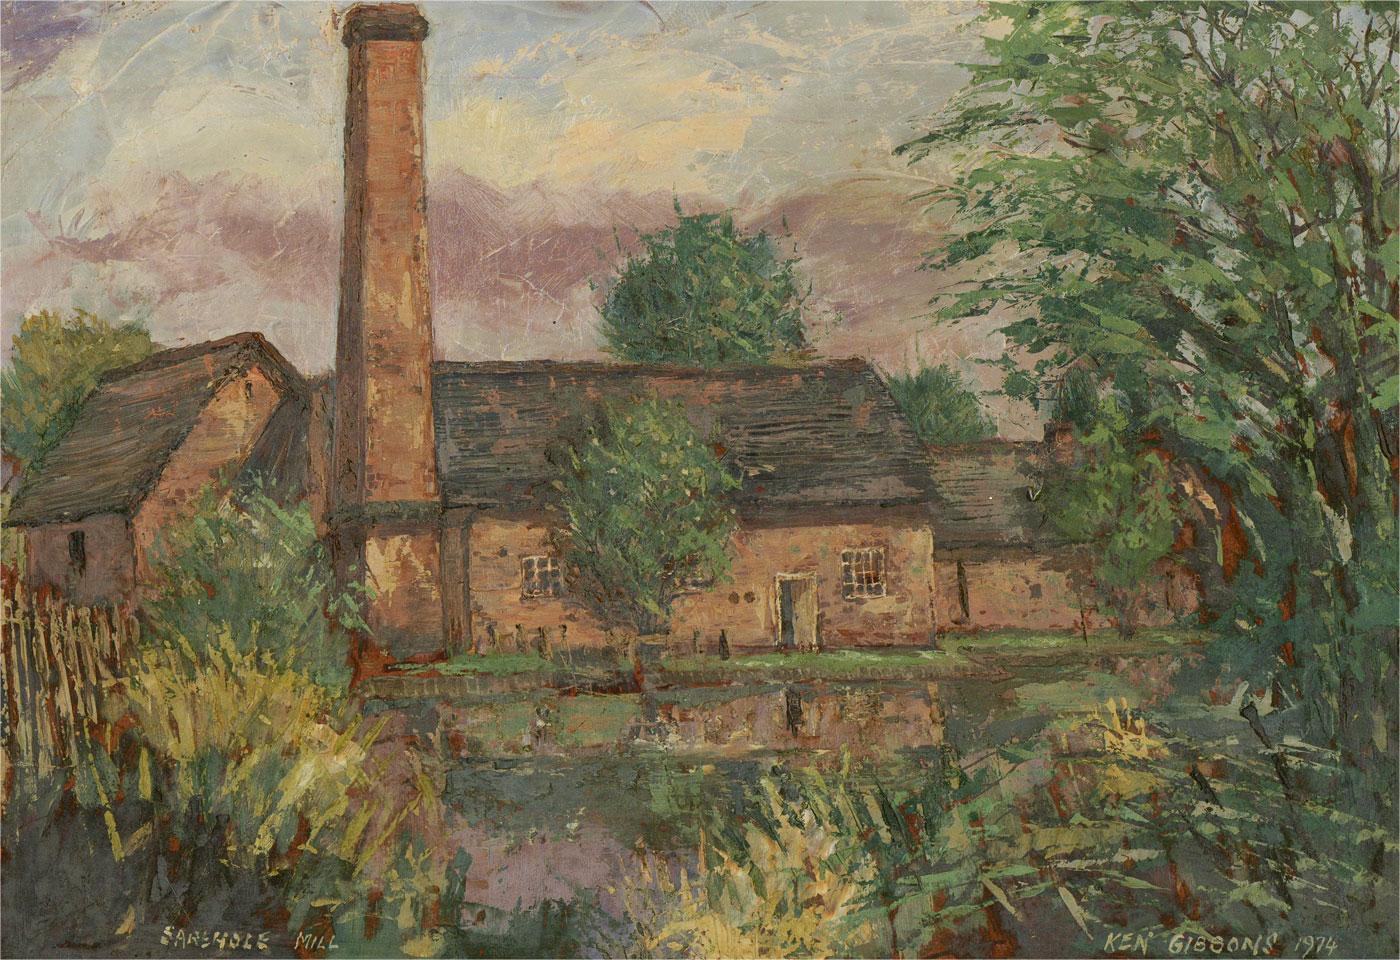 Ken Gibbons - 1974 Oil, Sarehole Mill 3